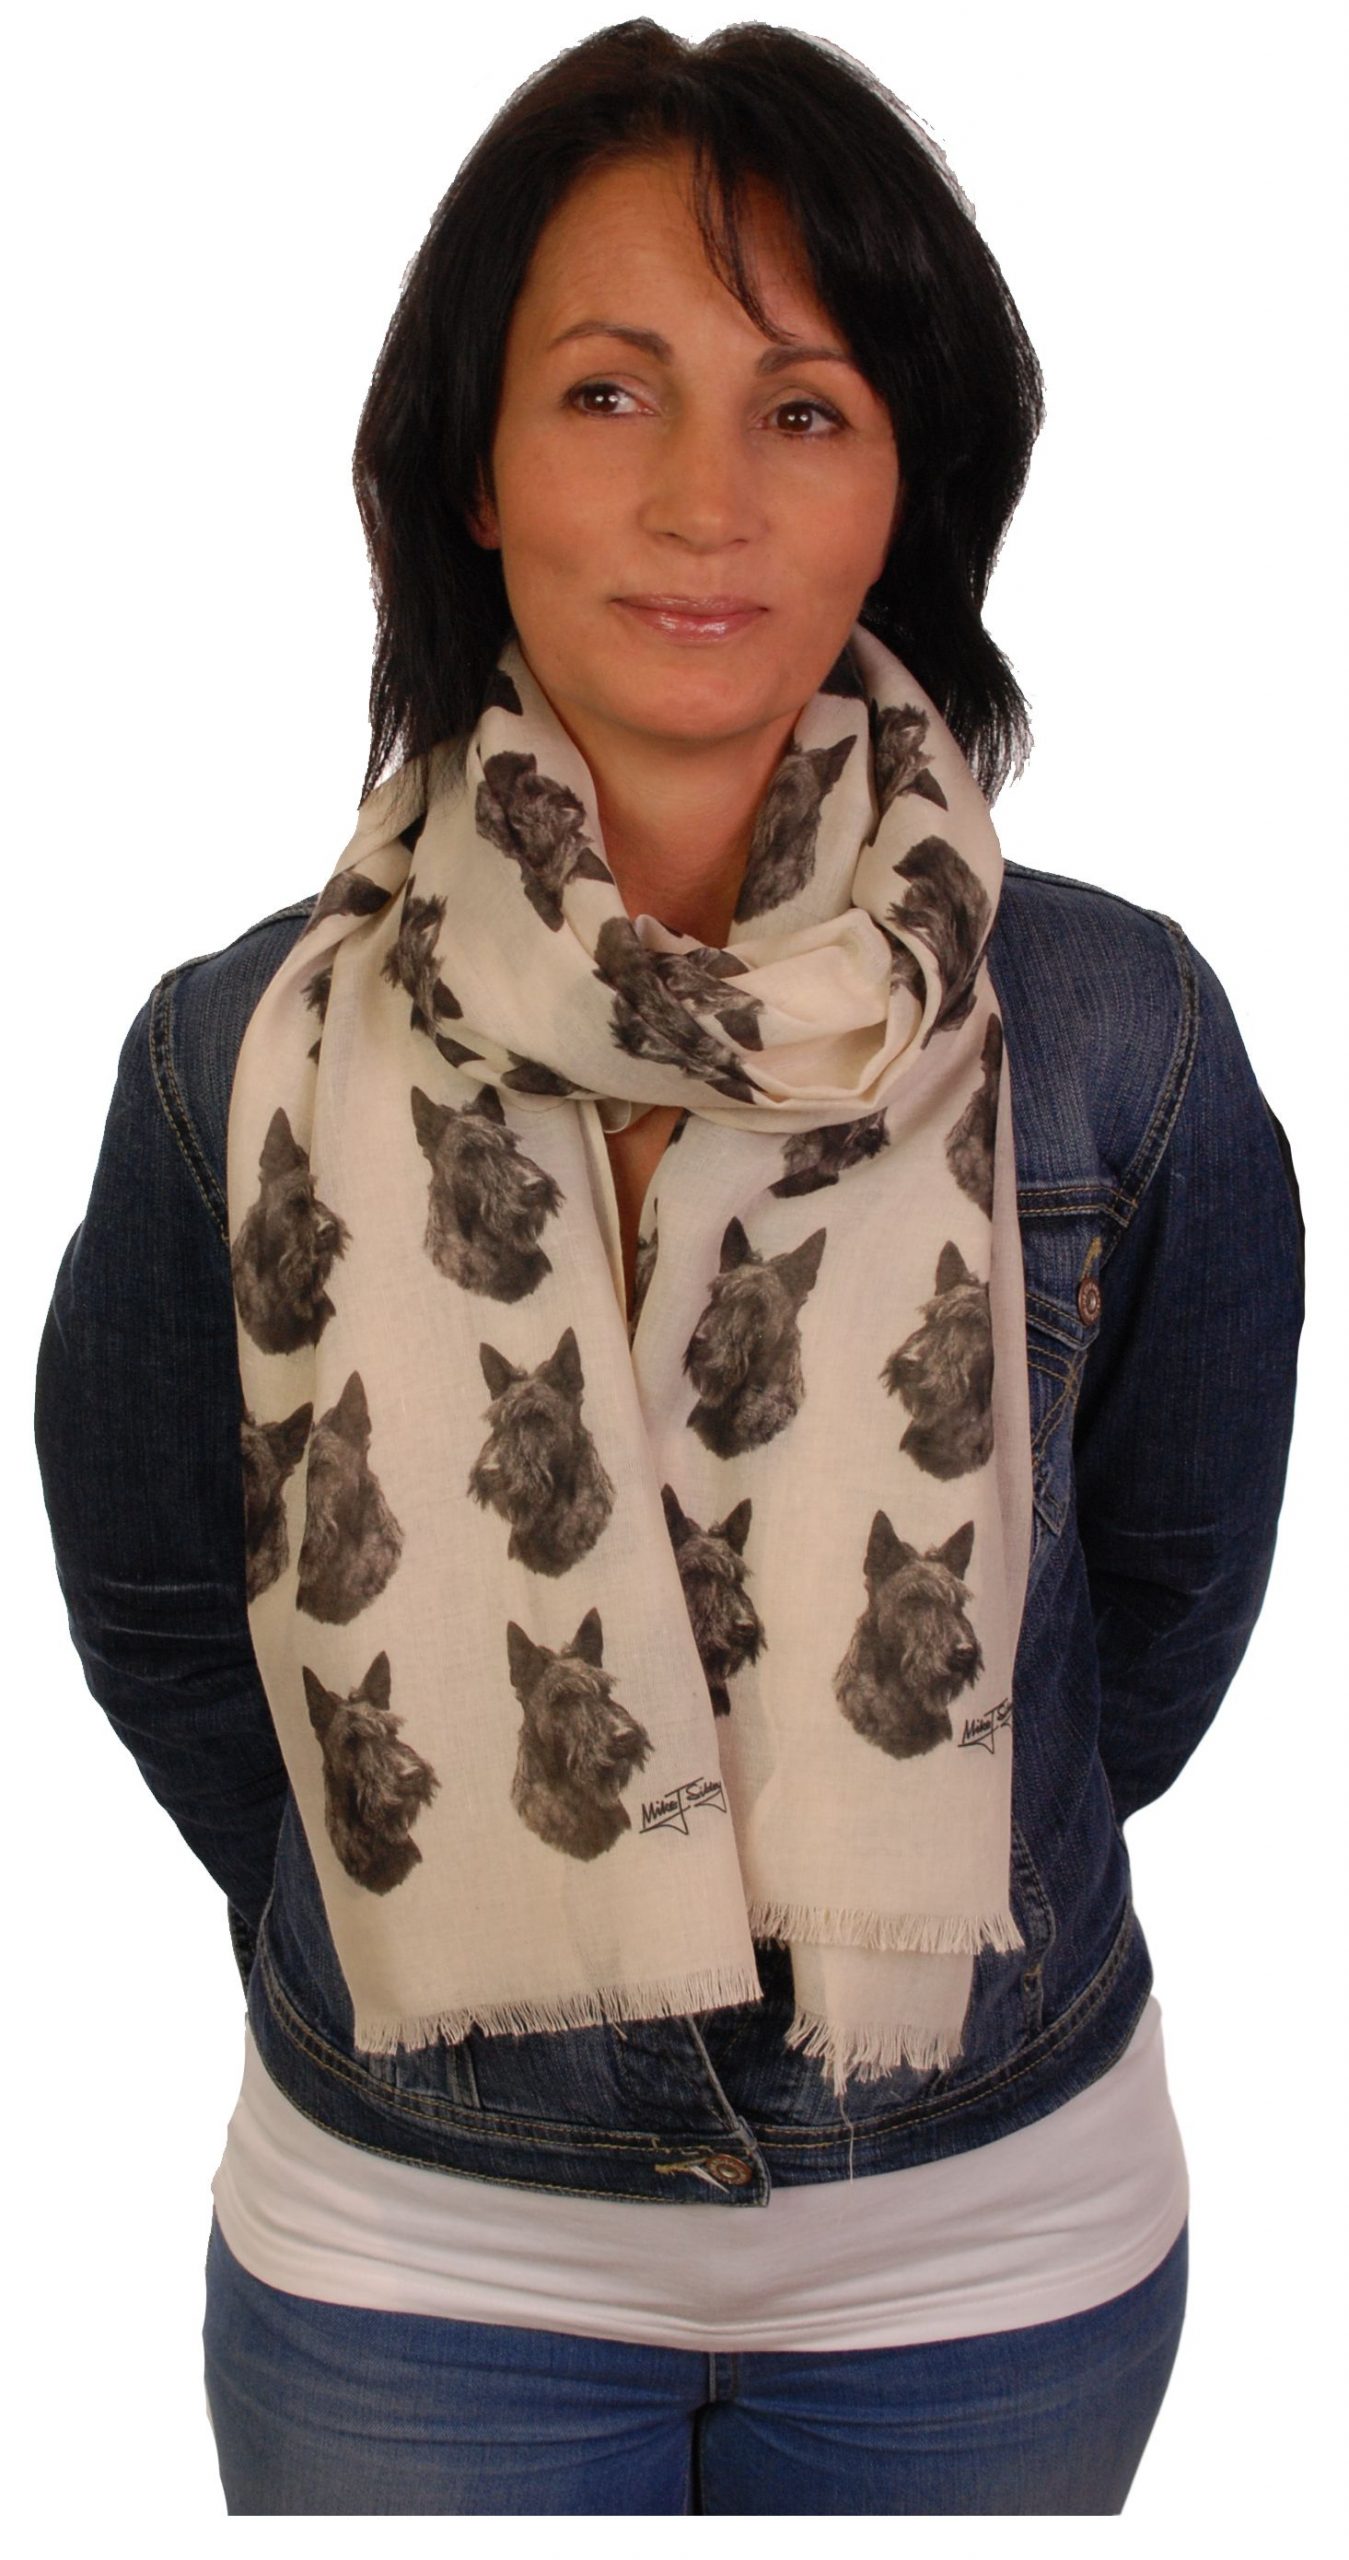 Mike Sibley Scottish Terrier licensed design ladies fashion scarf